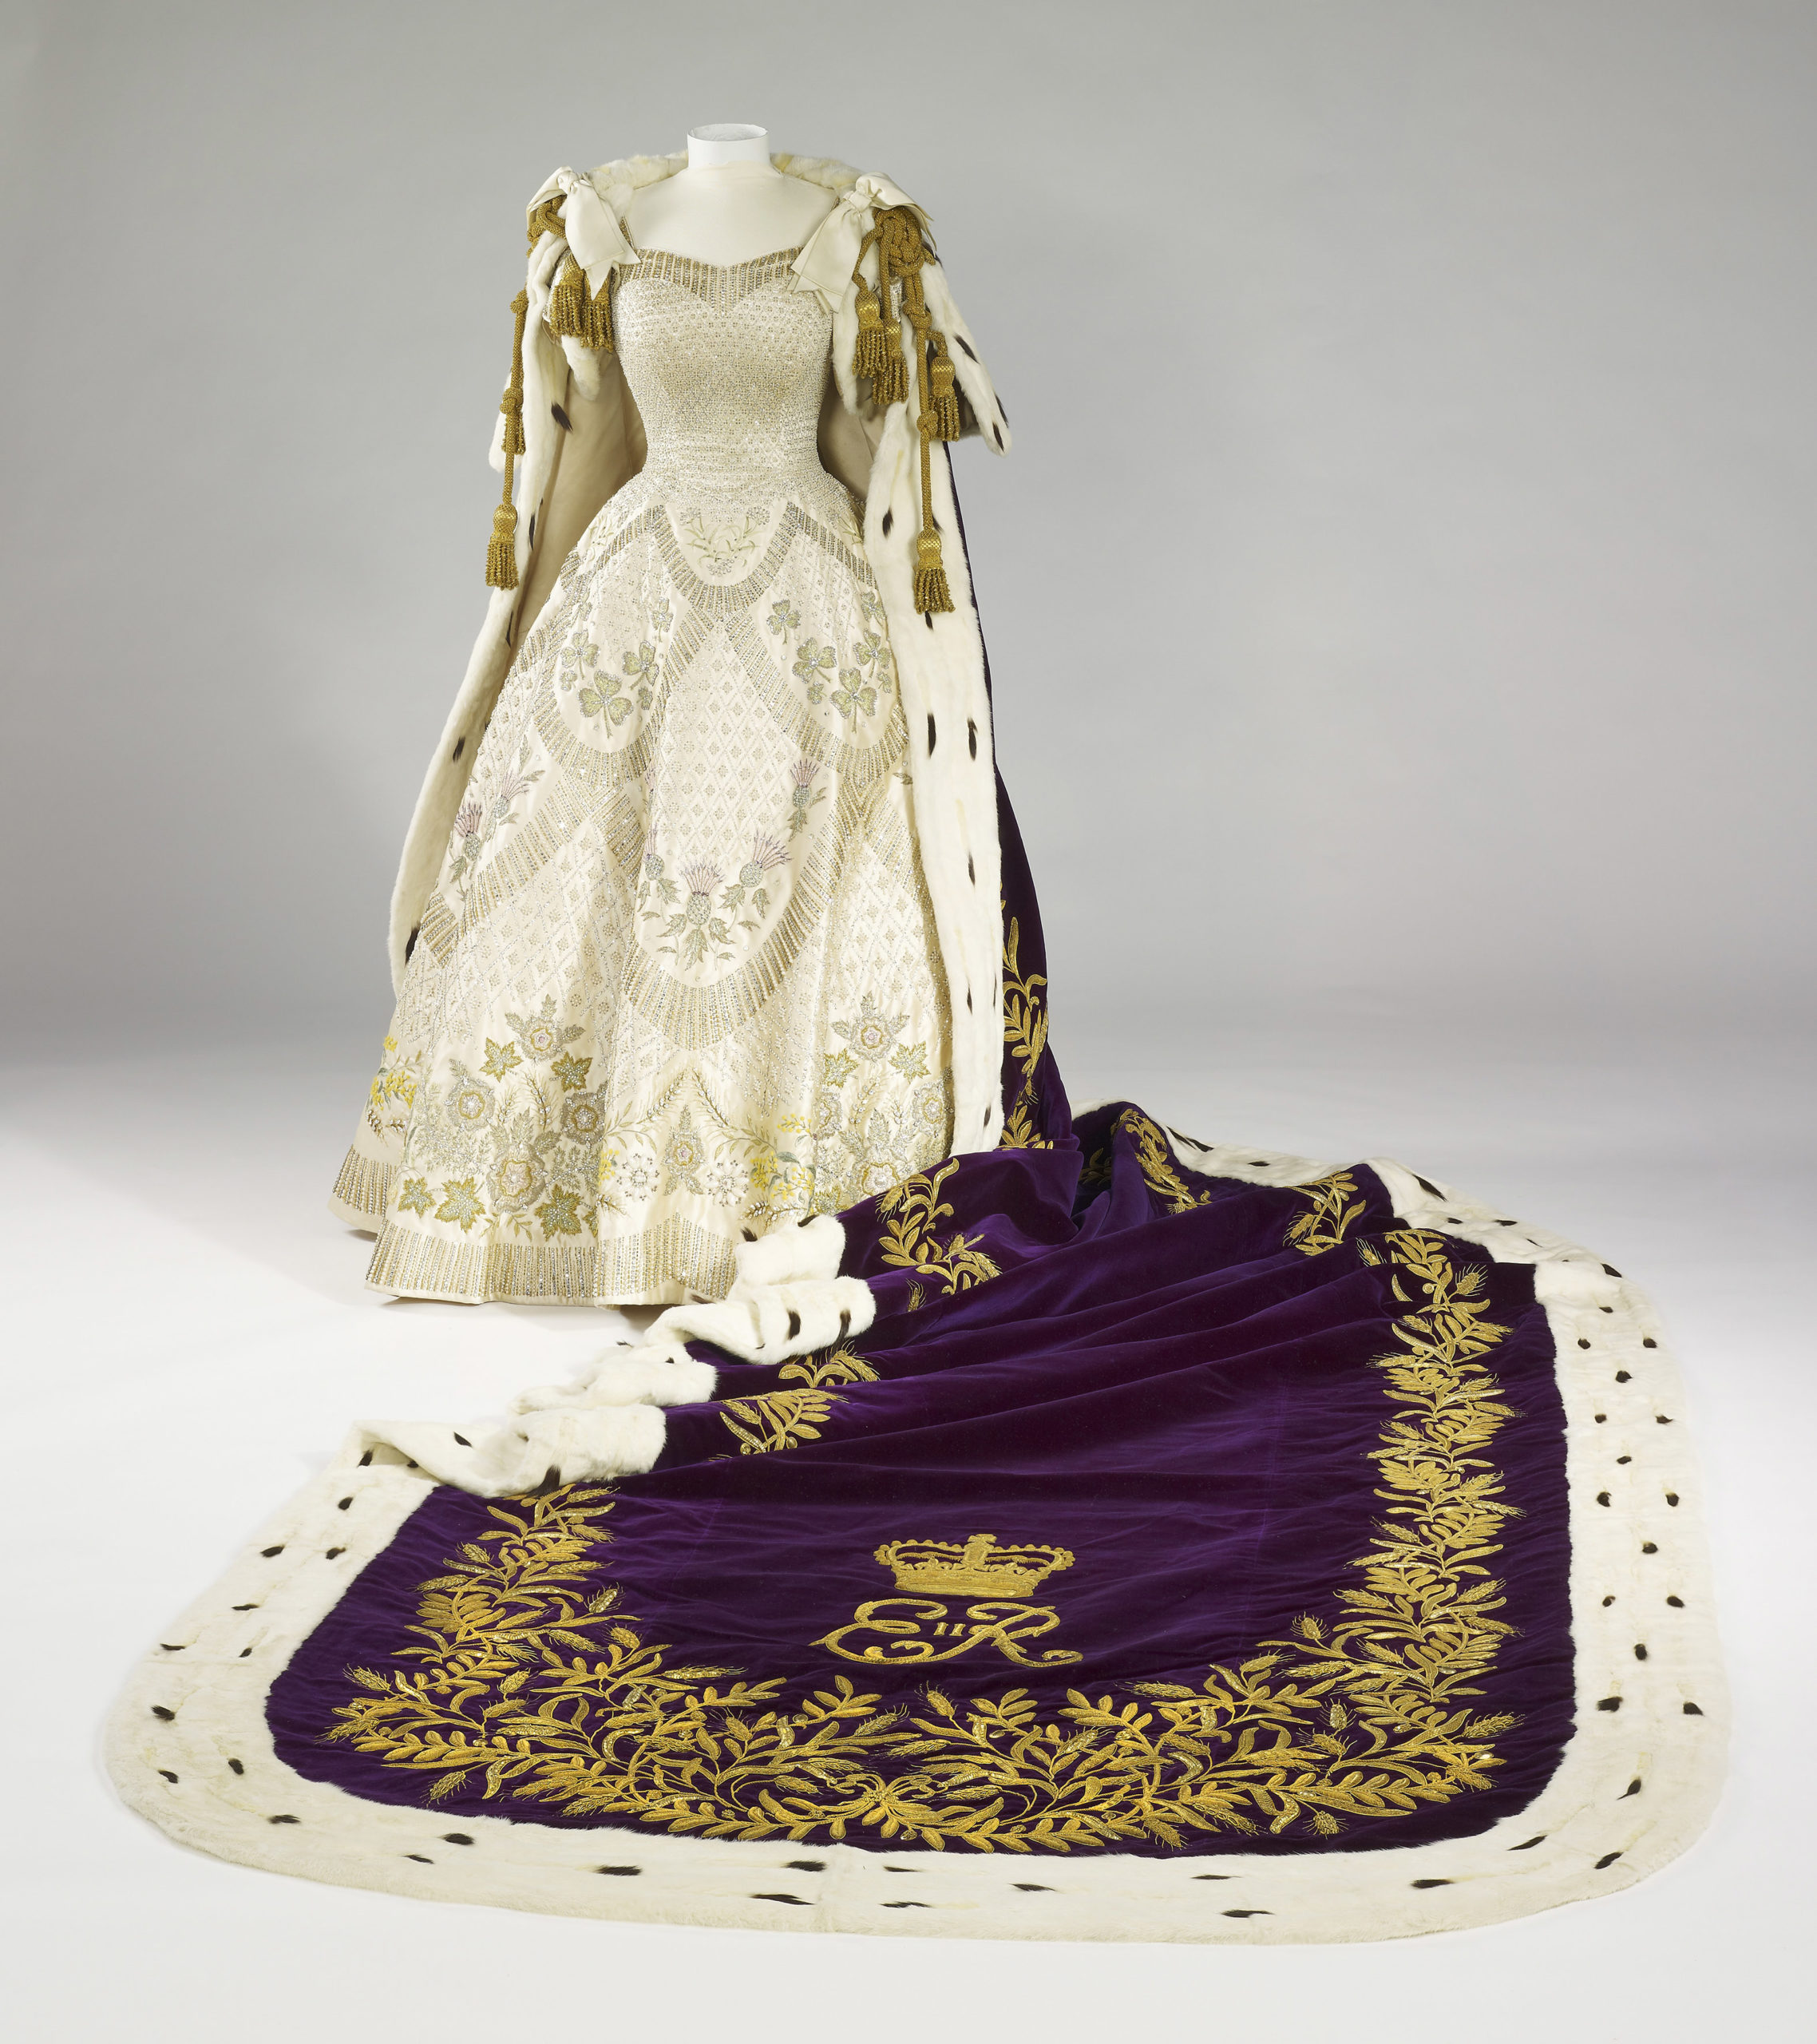 The Queen's Coronation Celebrations - Royal School of Needlework